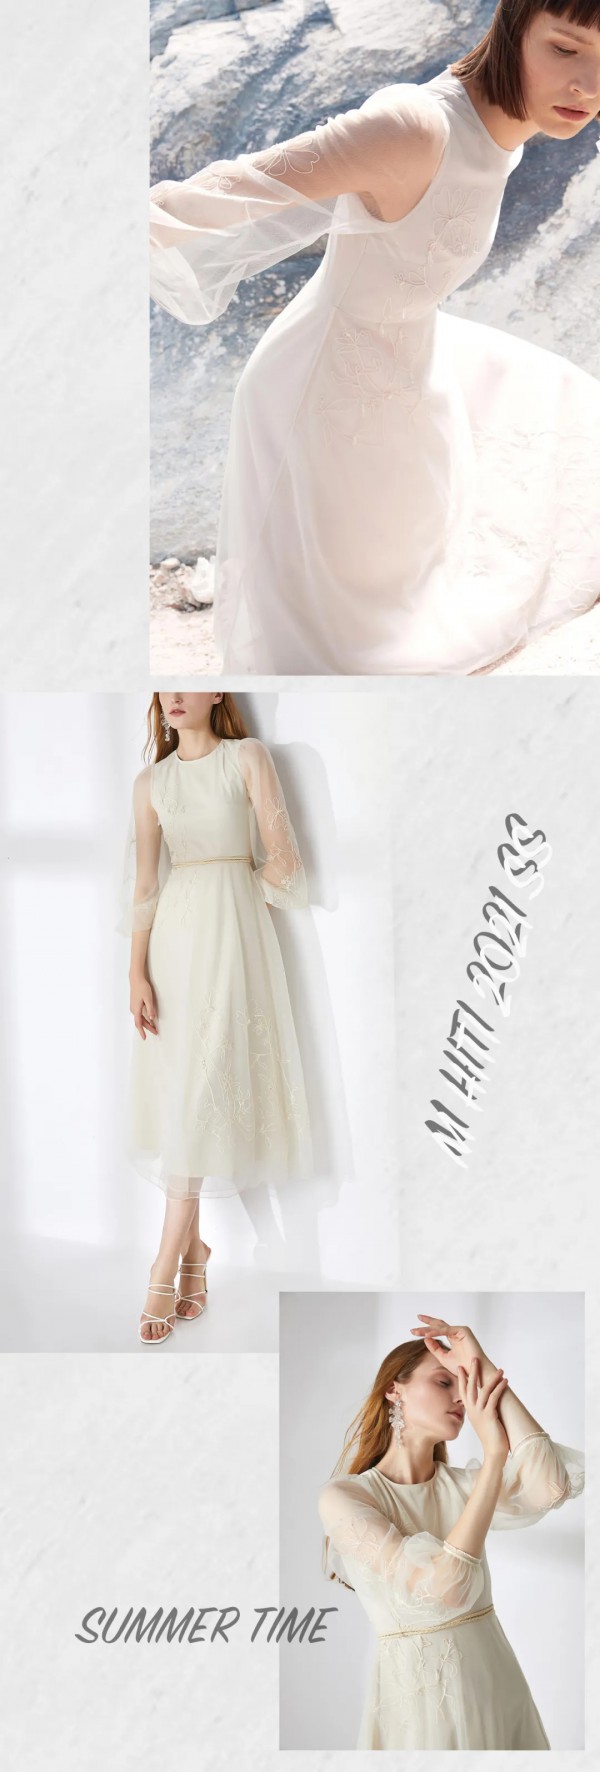 MYMO & M.HITI S/S | 穿上好看的连衣裙 让夏天变得更煦烂多姿